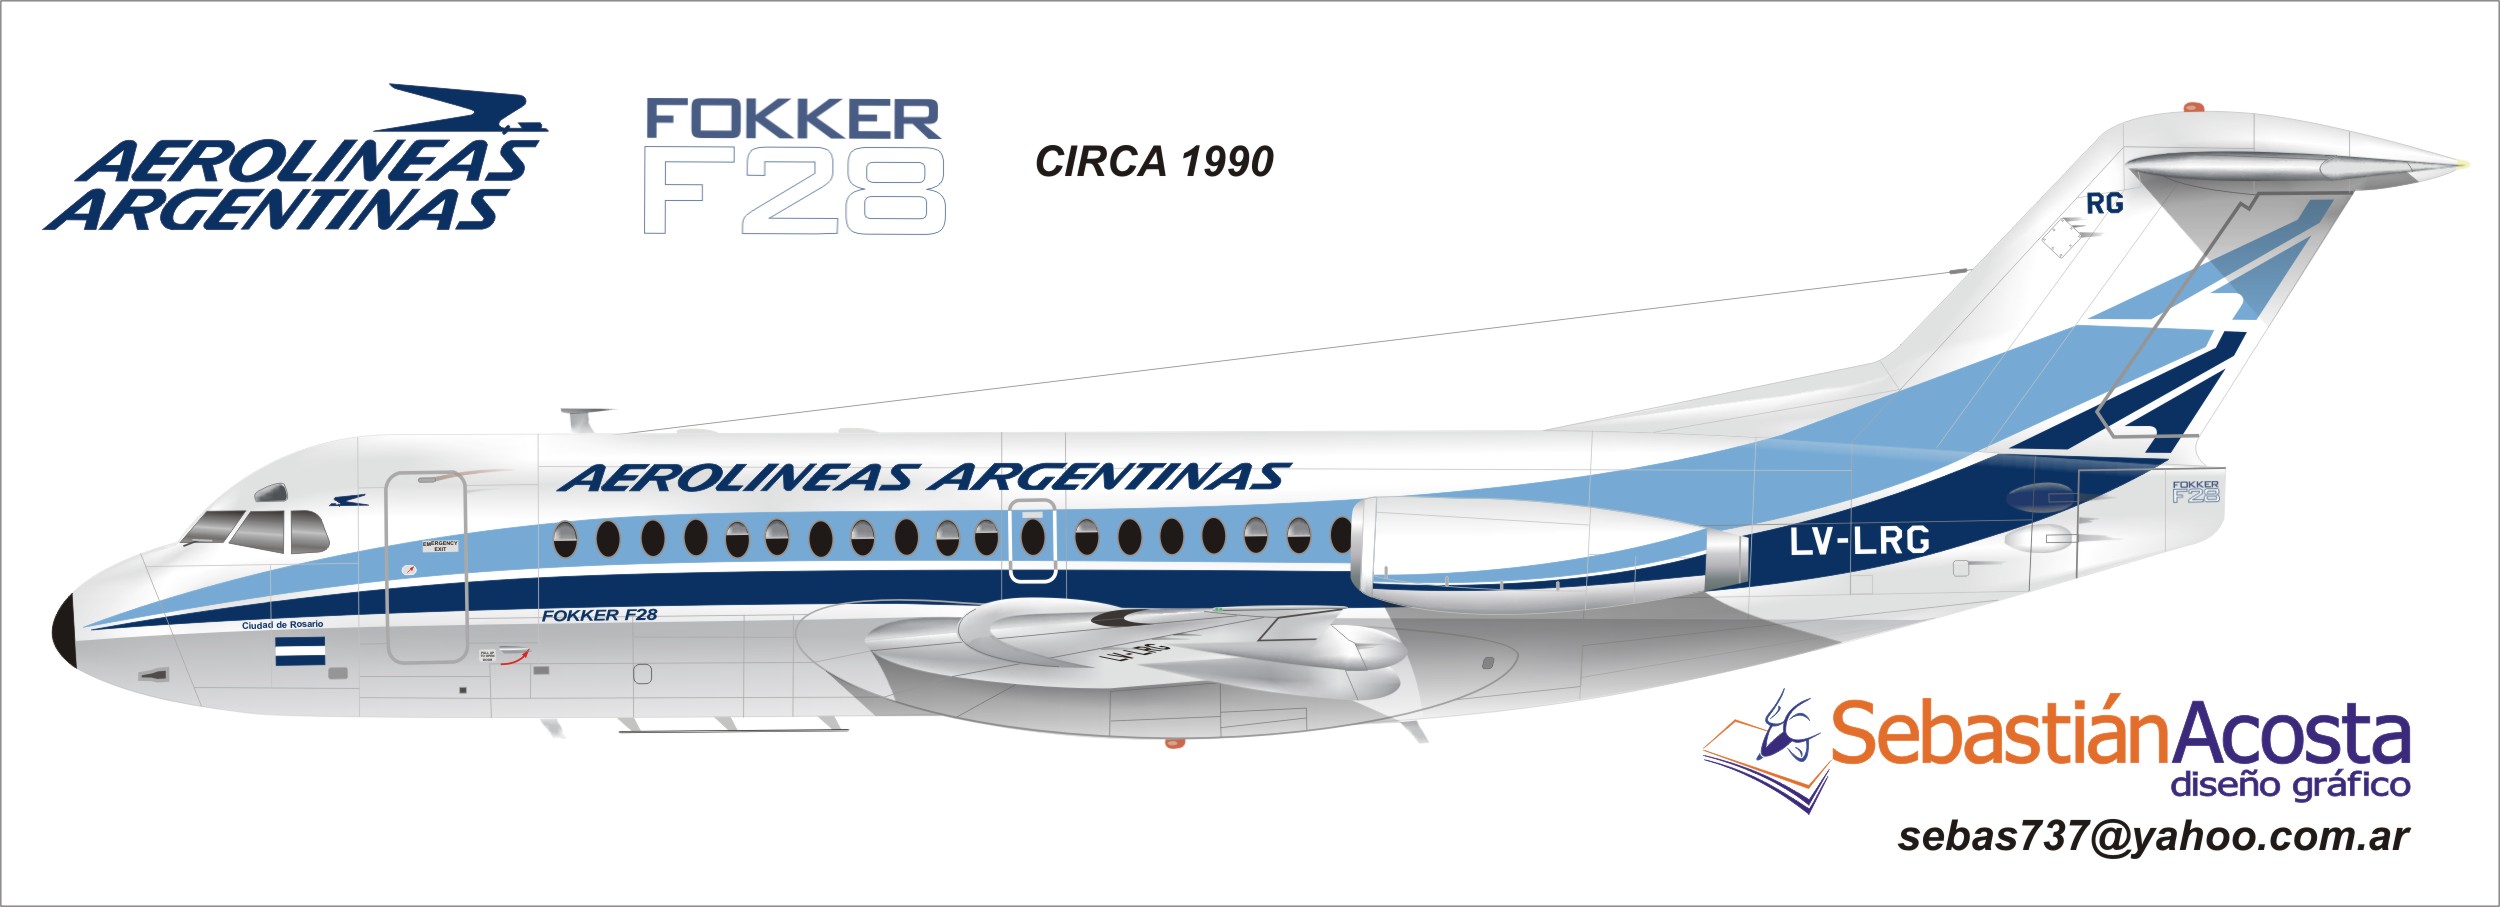 Fokker F-28 Fellowship previous